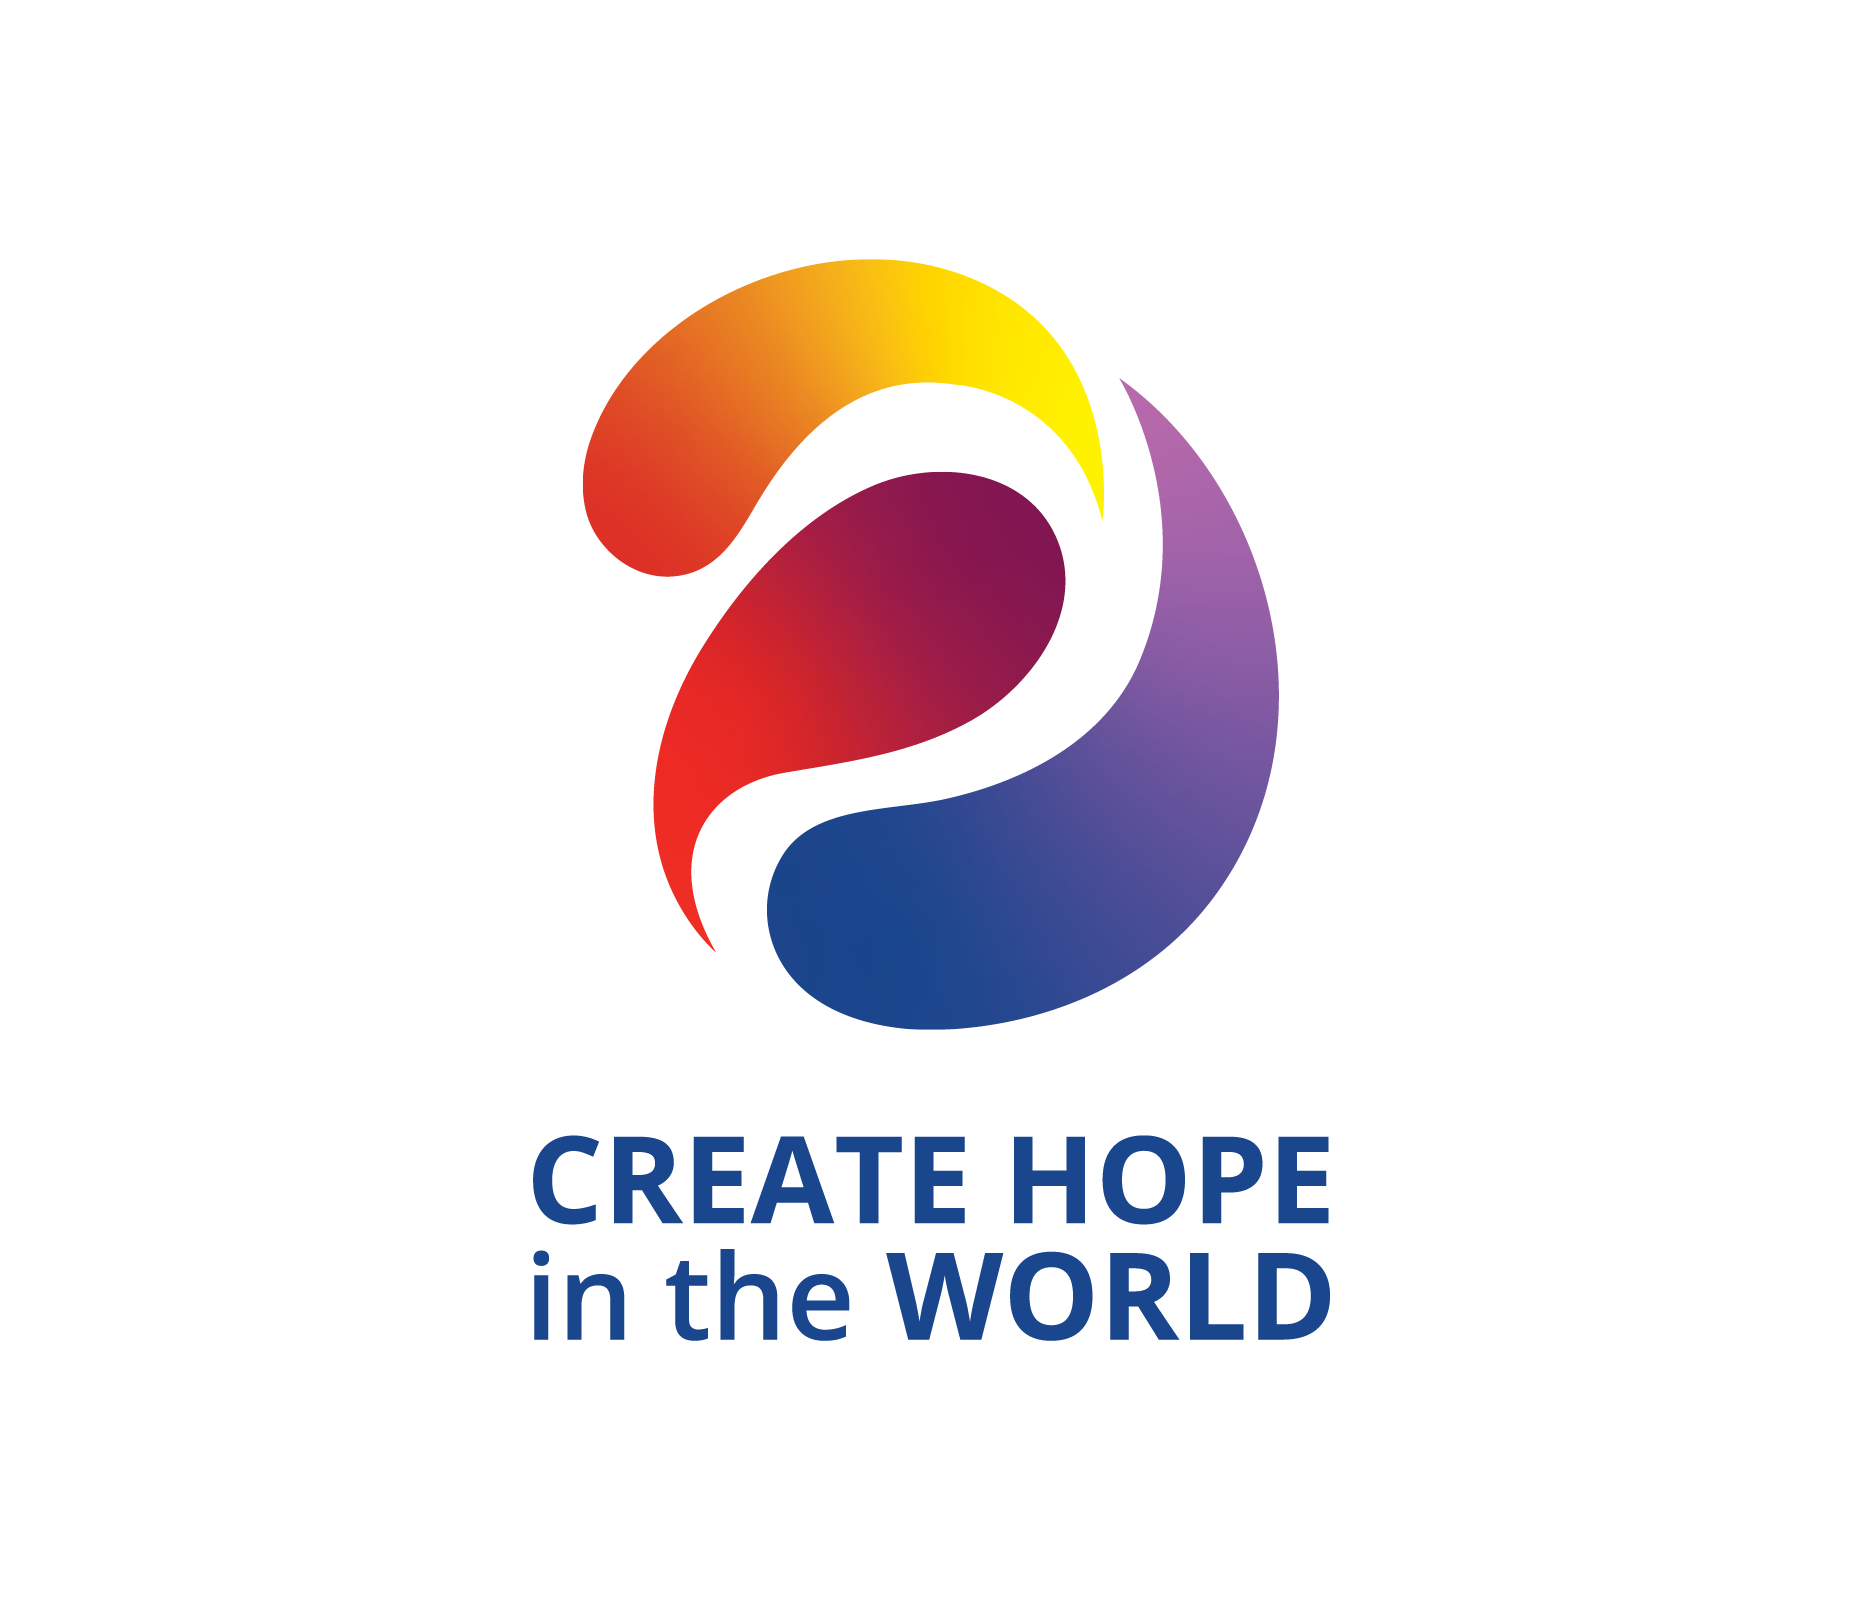 Rotary Serve To Change Lives Logo